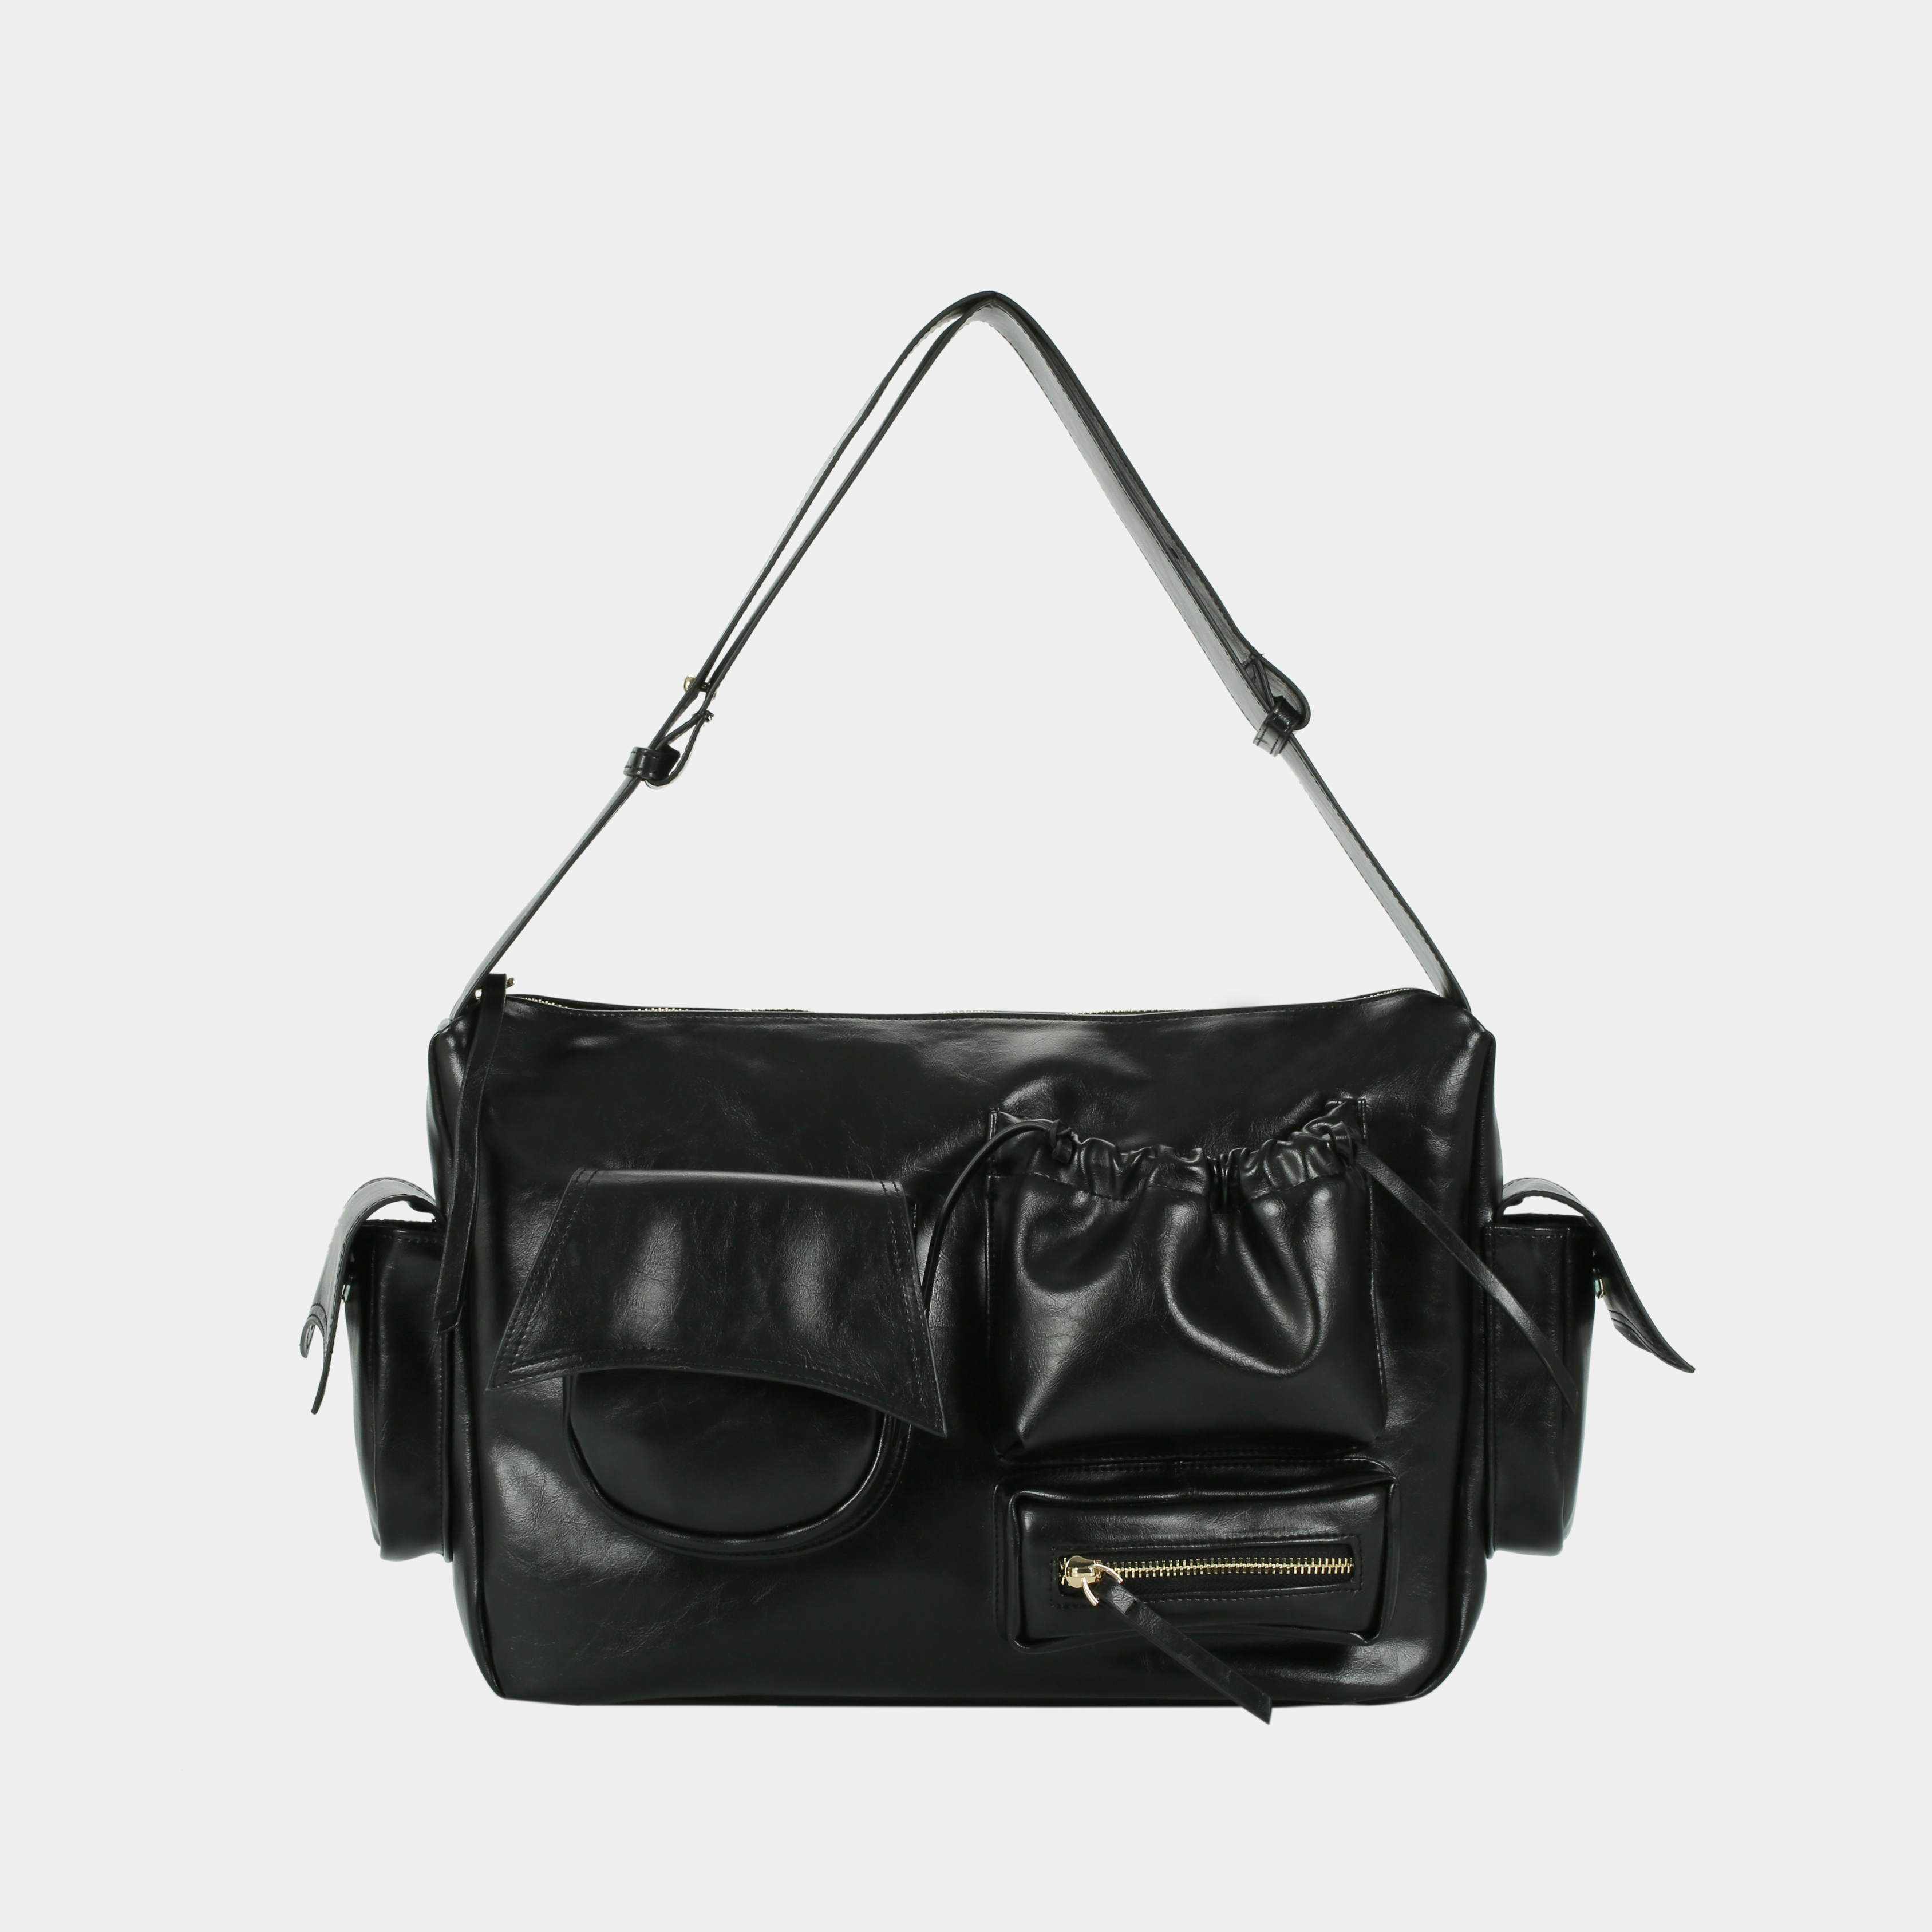 Túi xách C5-Pocket size Laptop (L) màu đen